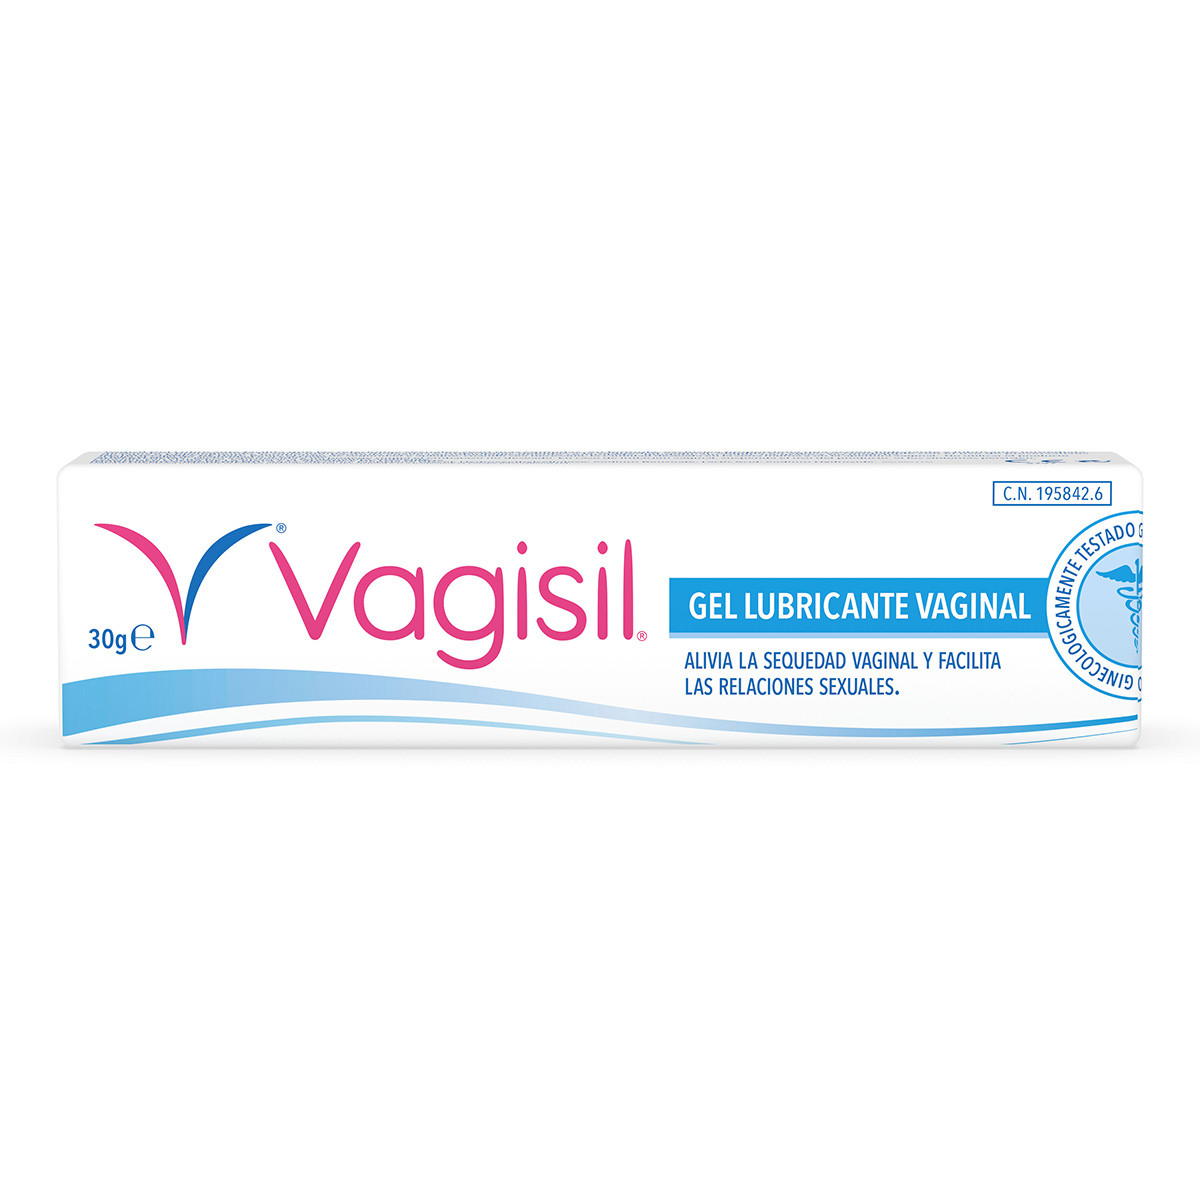 Vagisil gel lubricante vaginal 30g